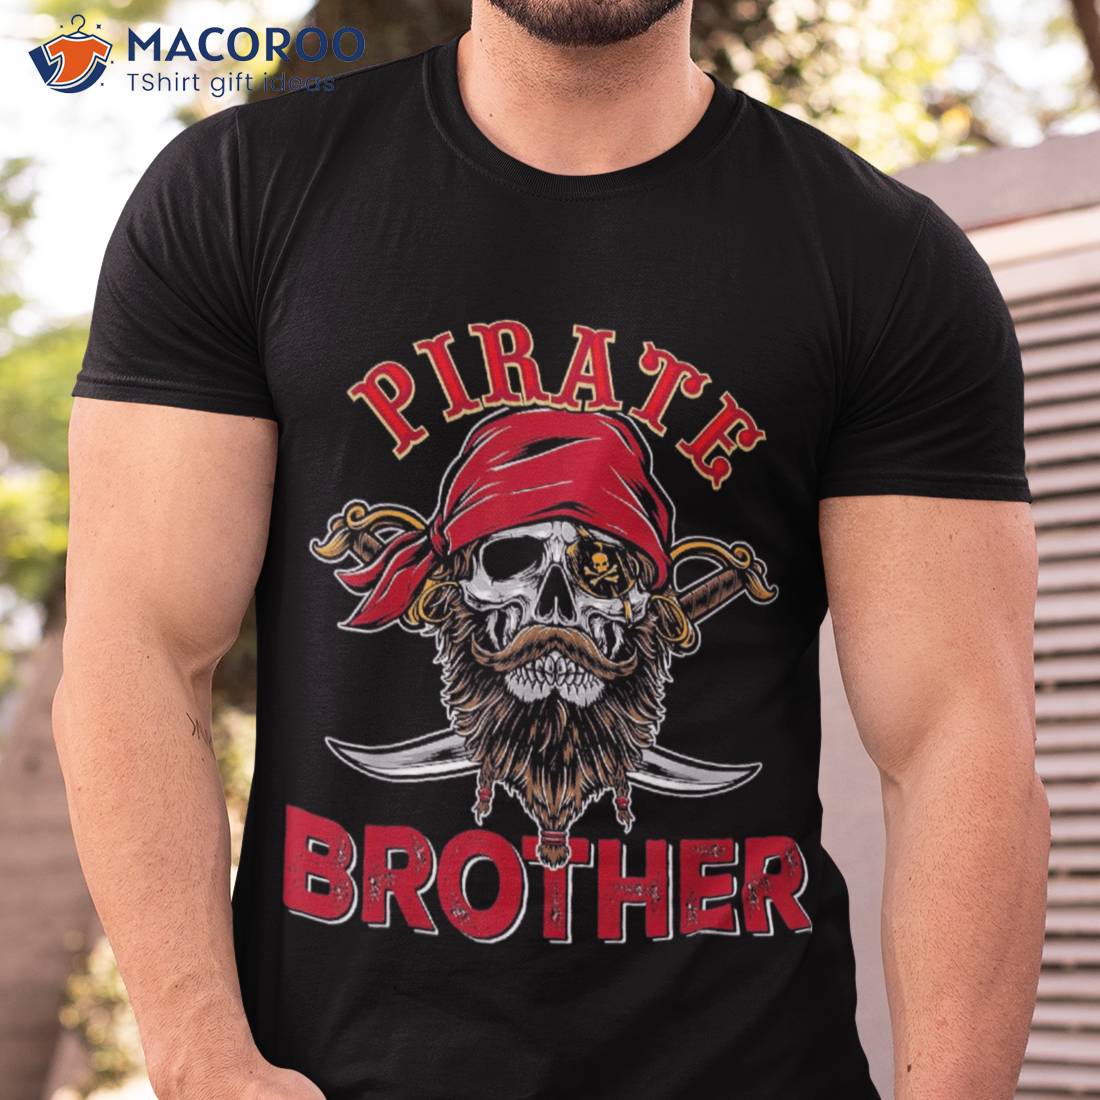 Pirate T-shirts  27 Custom Pirate T-shirt Designs